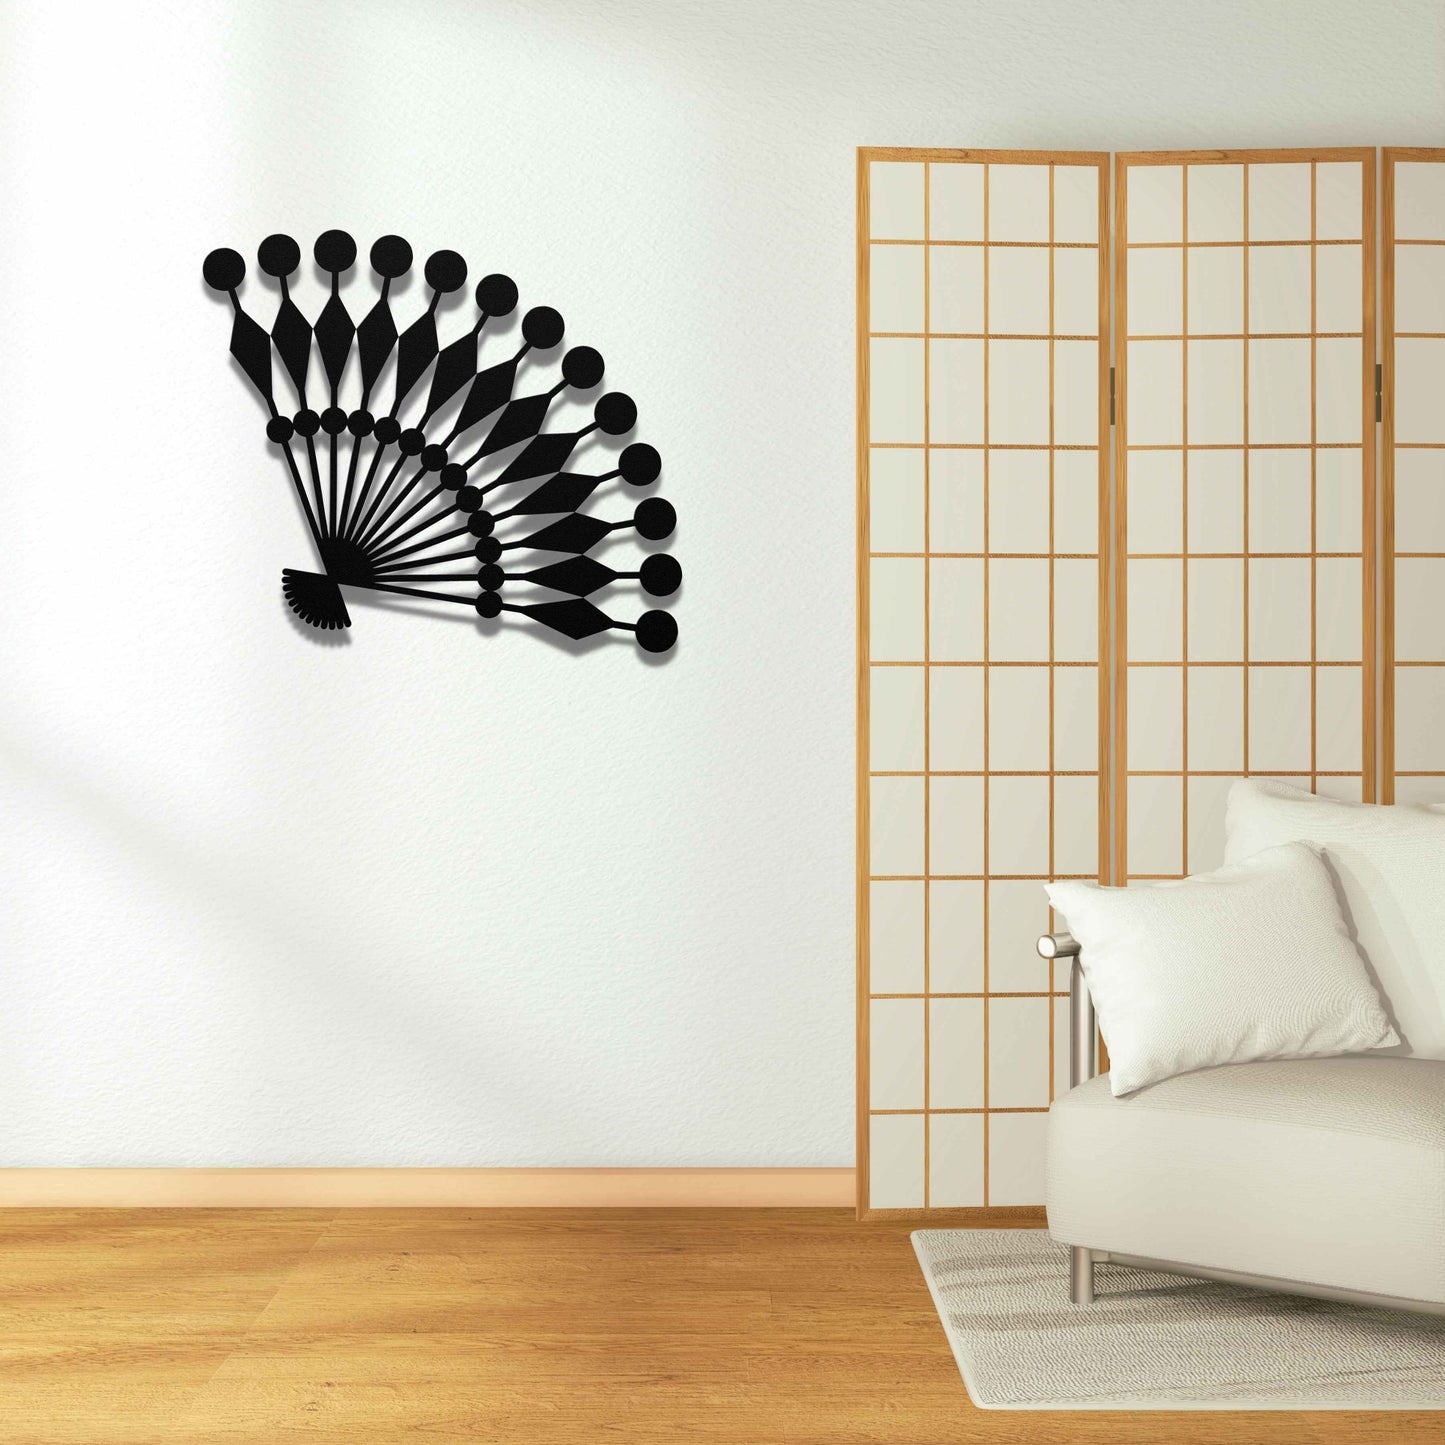 Asian traditional hand fan decorative metal wall art